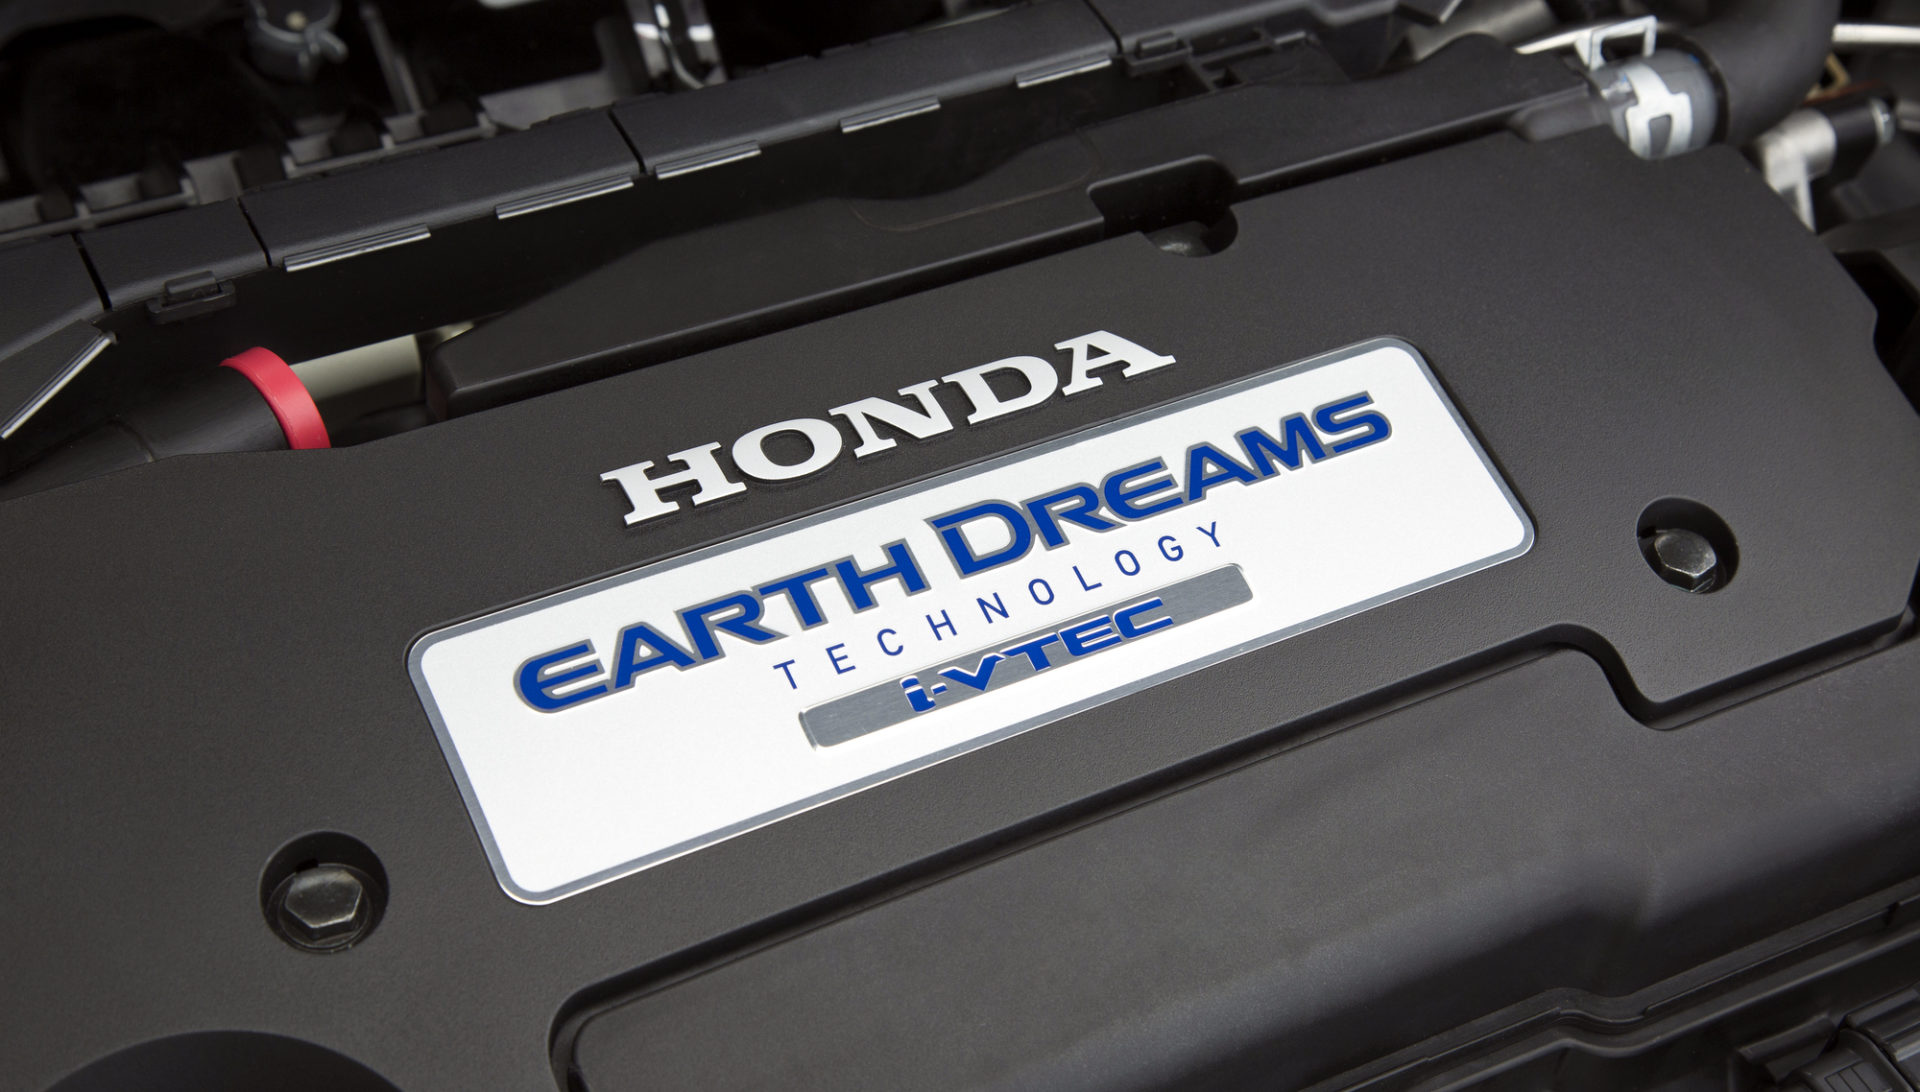 Honda Earth Dreams Engine